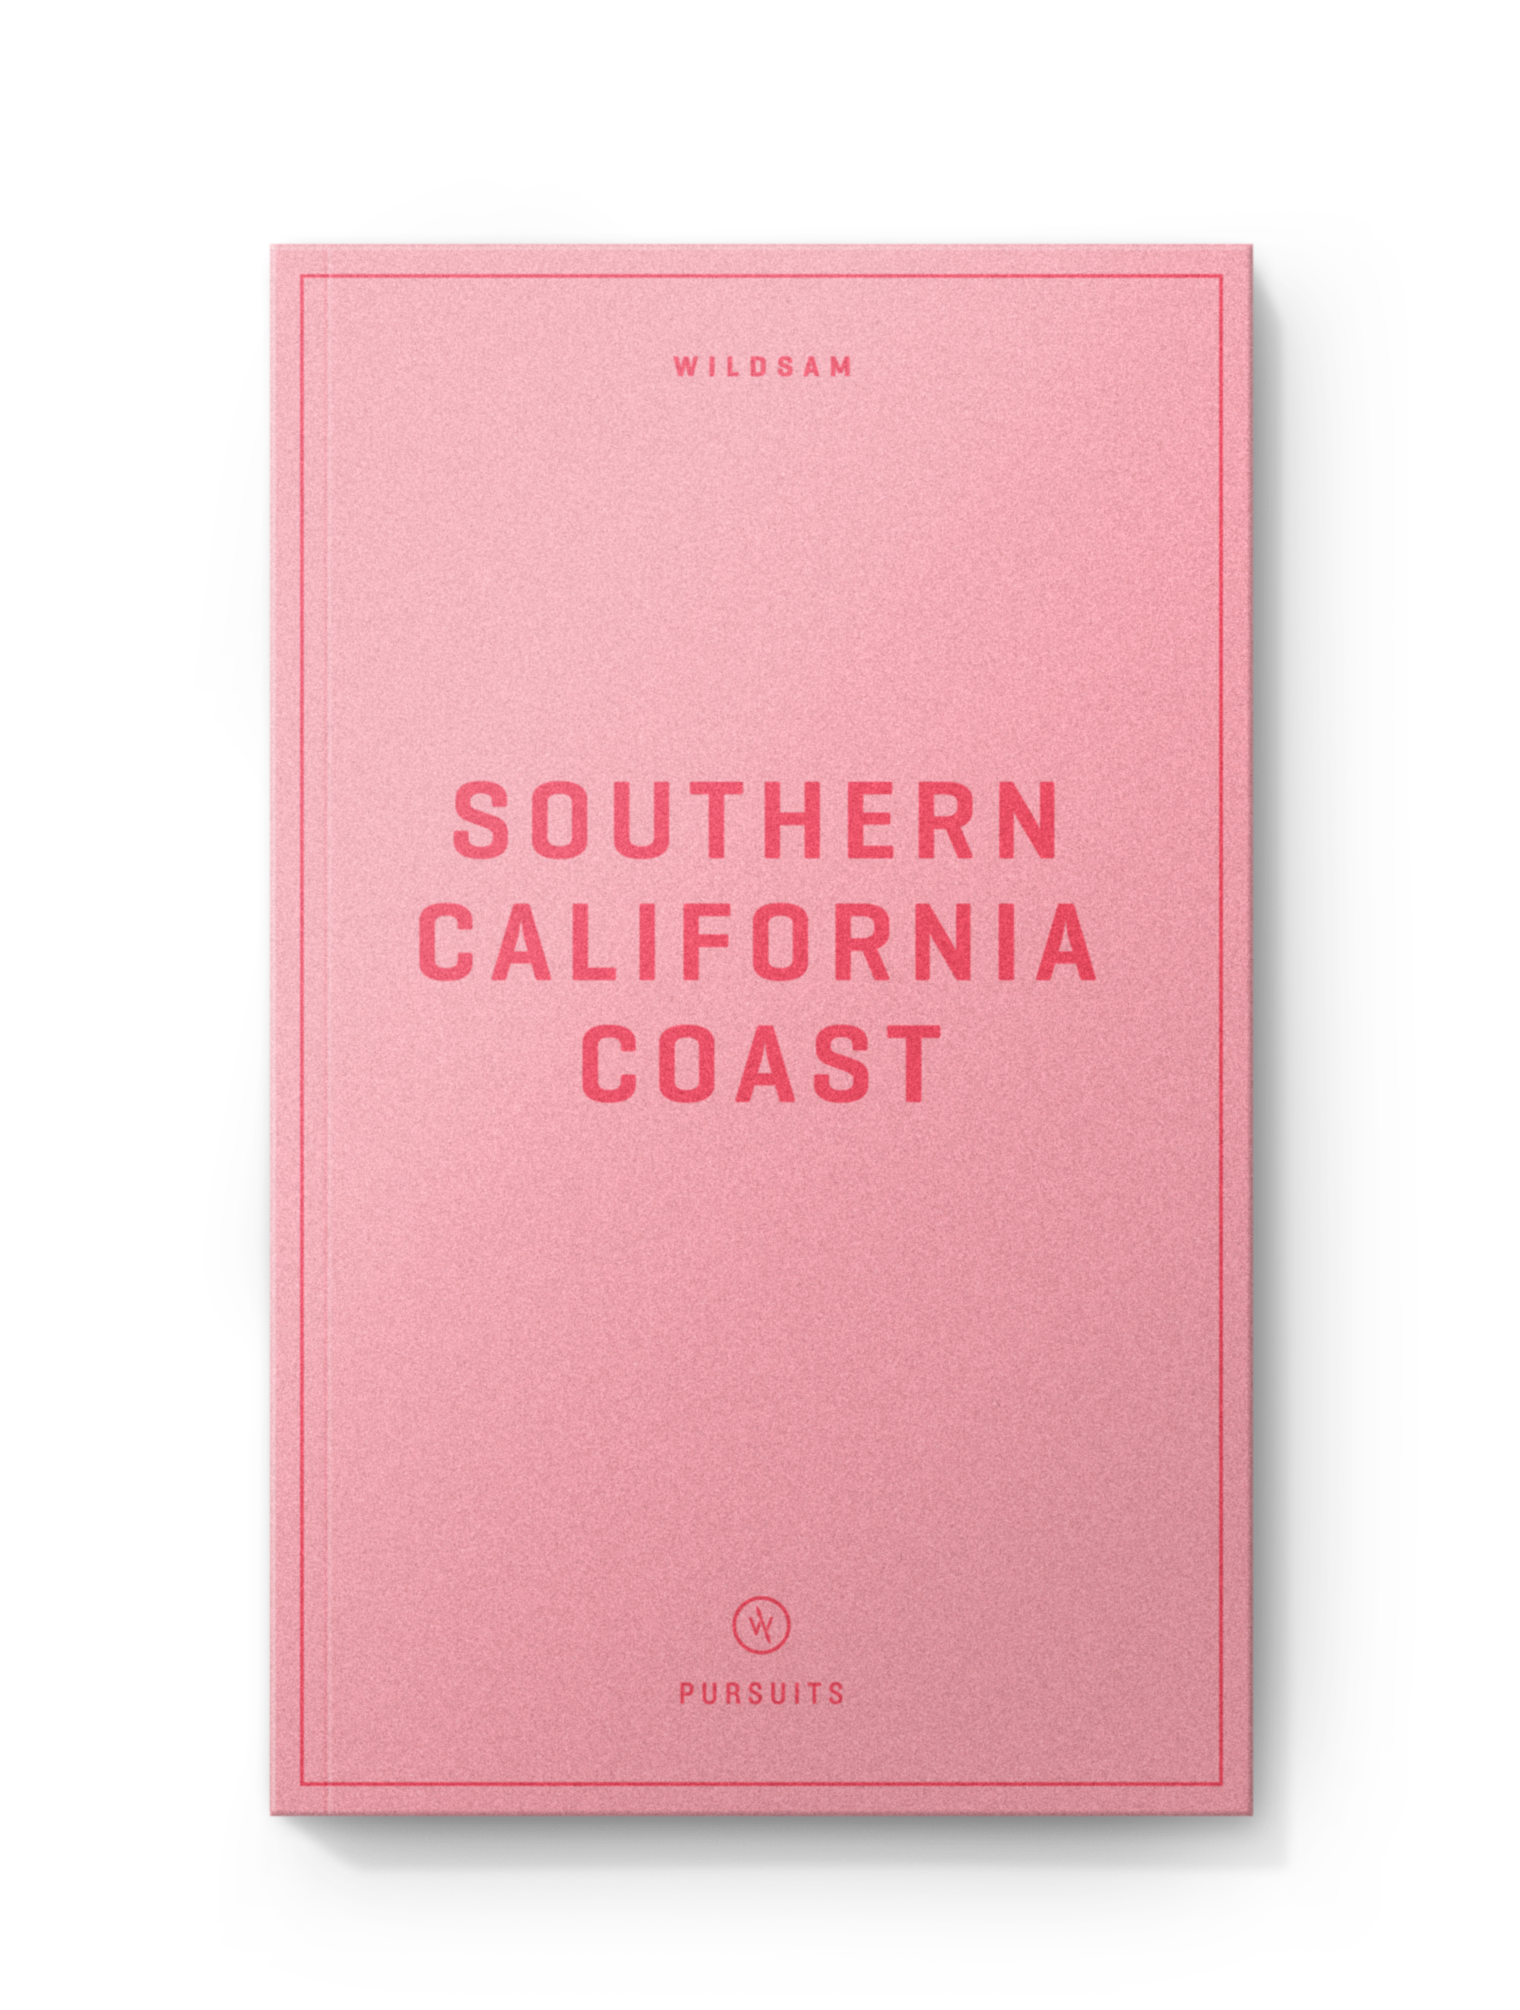 SOUTHERN CALIFORNIA COAST